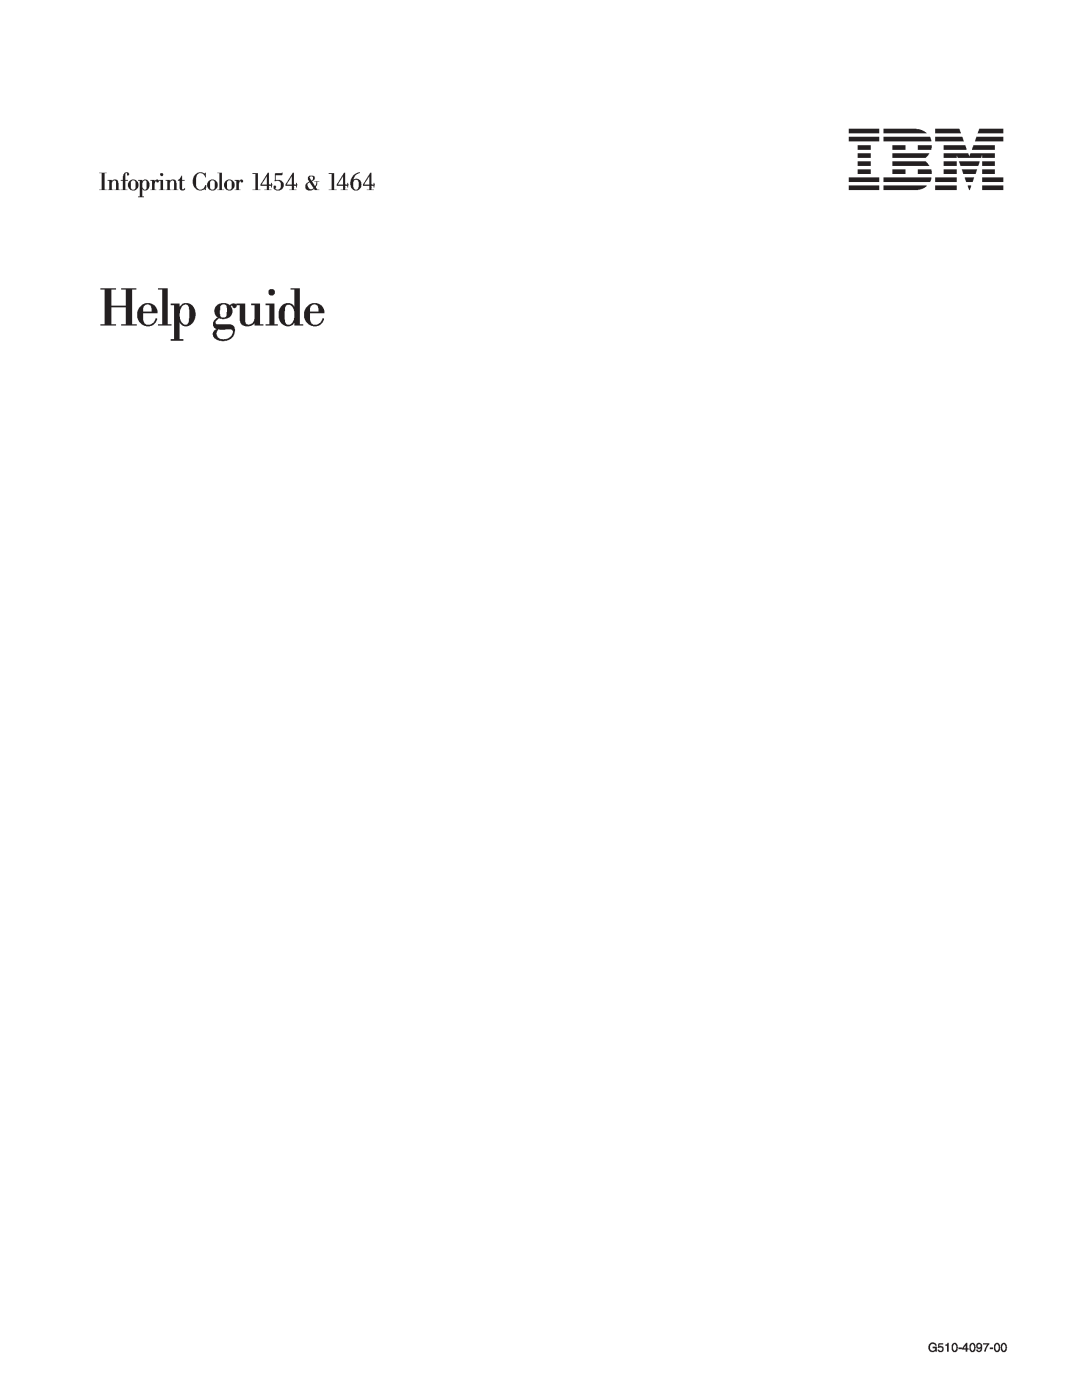 IBM 1454, 1464 manual Help guide, Infoprint Color, G510-4097-00 